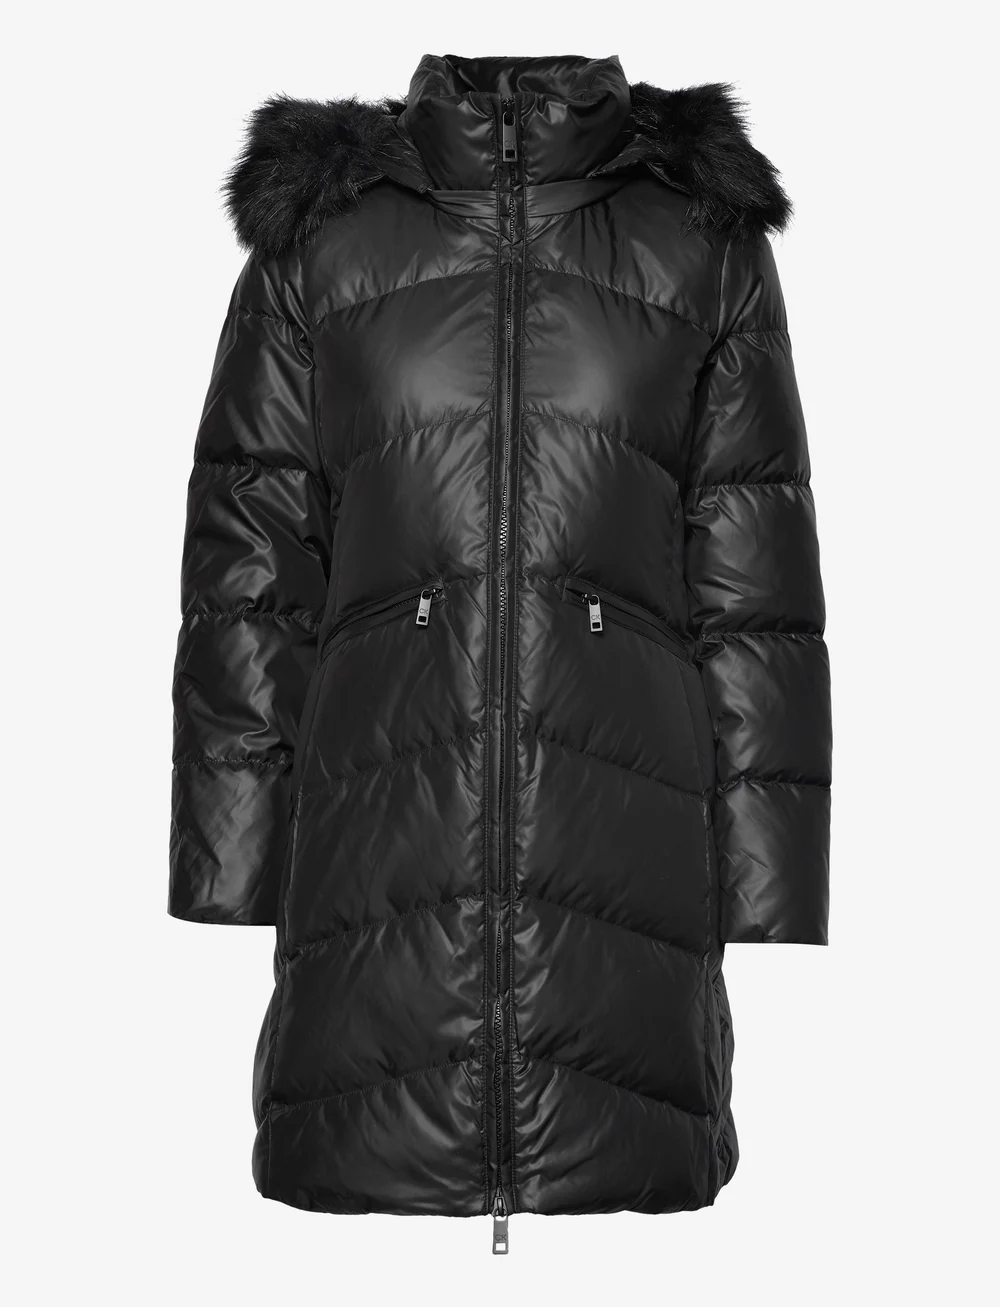 coats Coat & Down Real – Calvin Essential Booztlet shop – jackets at Klein